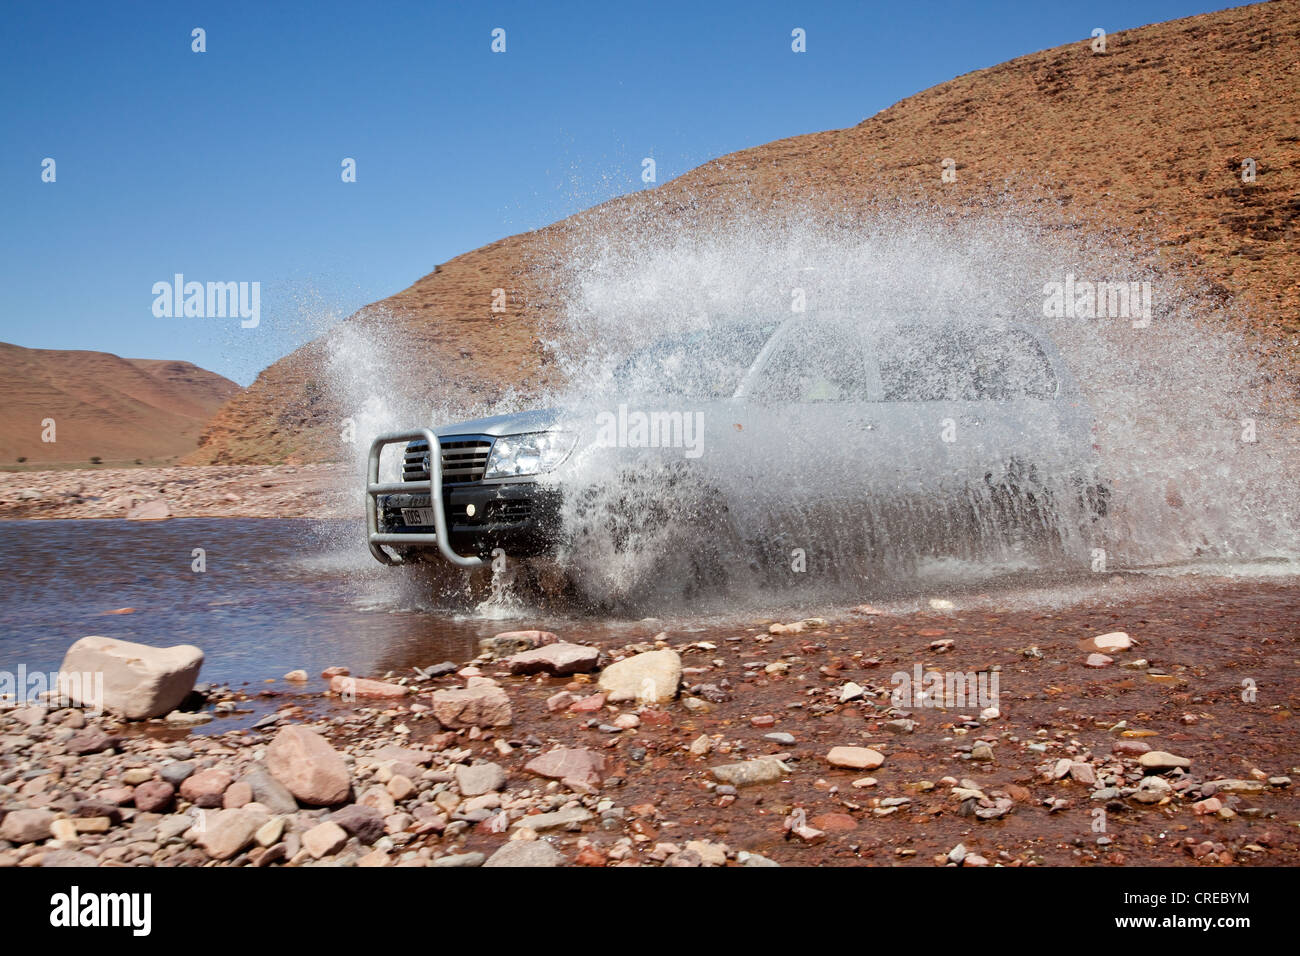 All-terrain vehicle, Toyota Land Cruiser, driving through a river bed near Foum-Zguid, Morocco, Africa Stock Photo